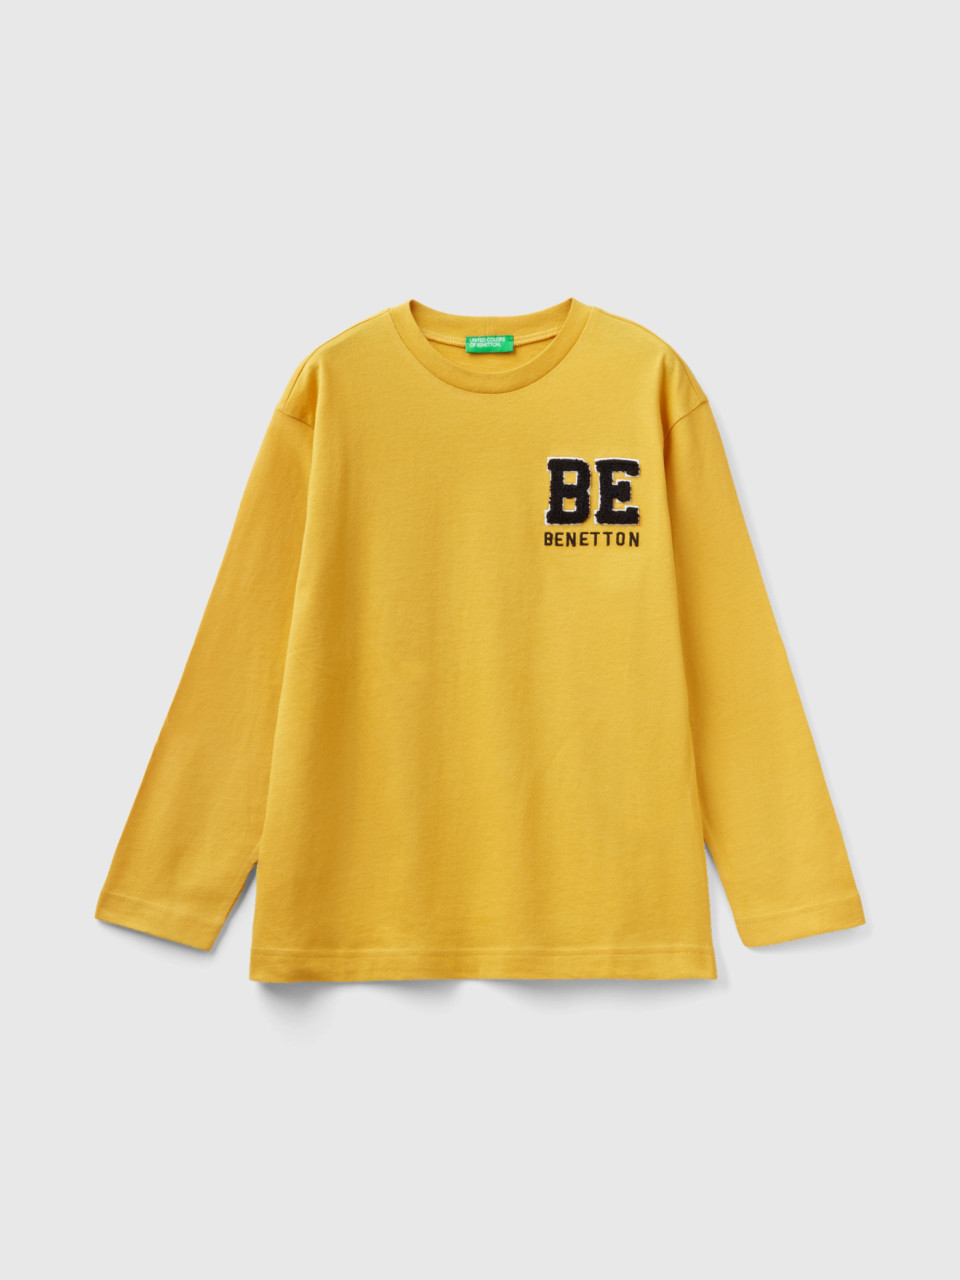 Benetton, Warm 100% Organic Cotton T-shirt, Yellow, Kids